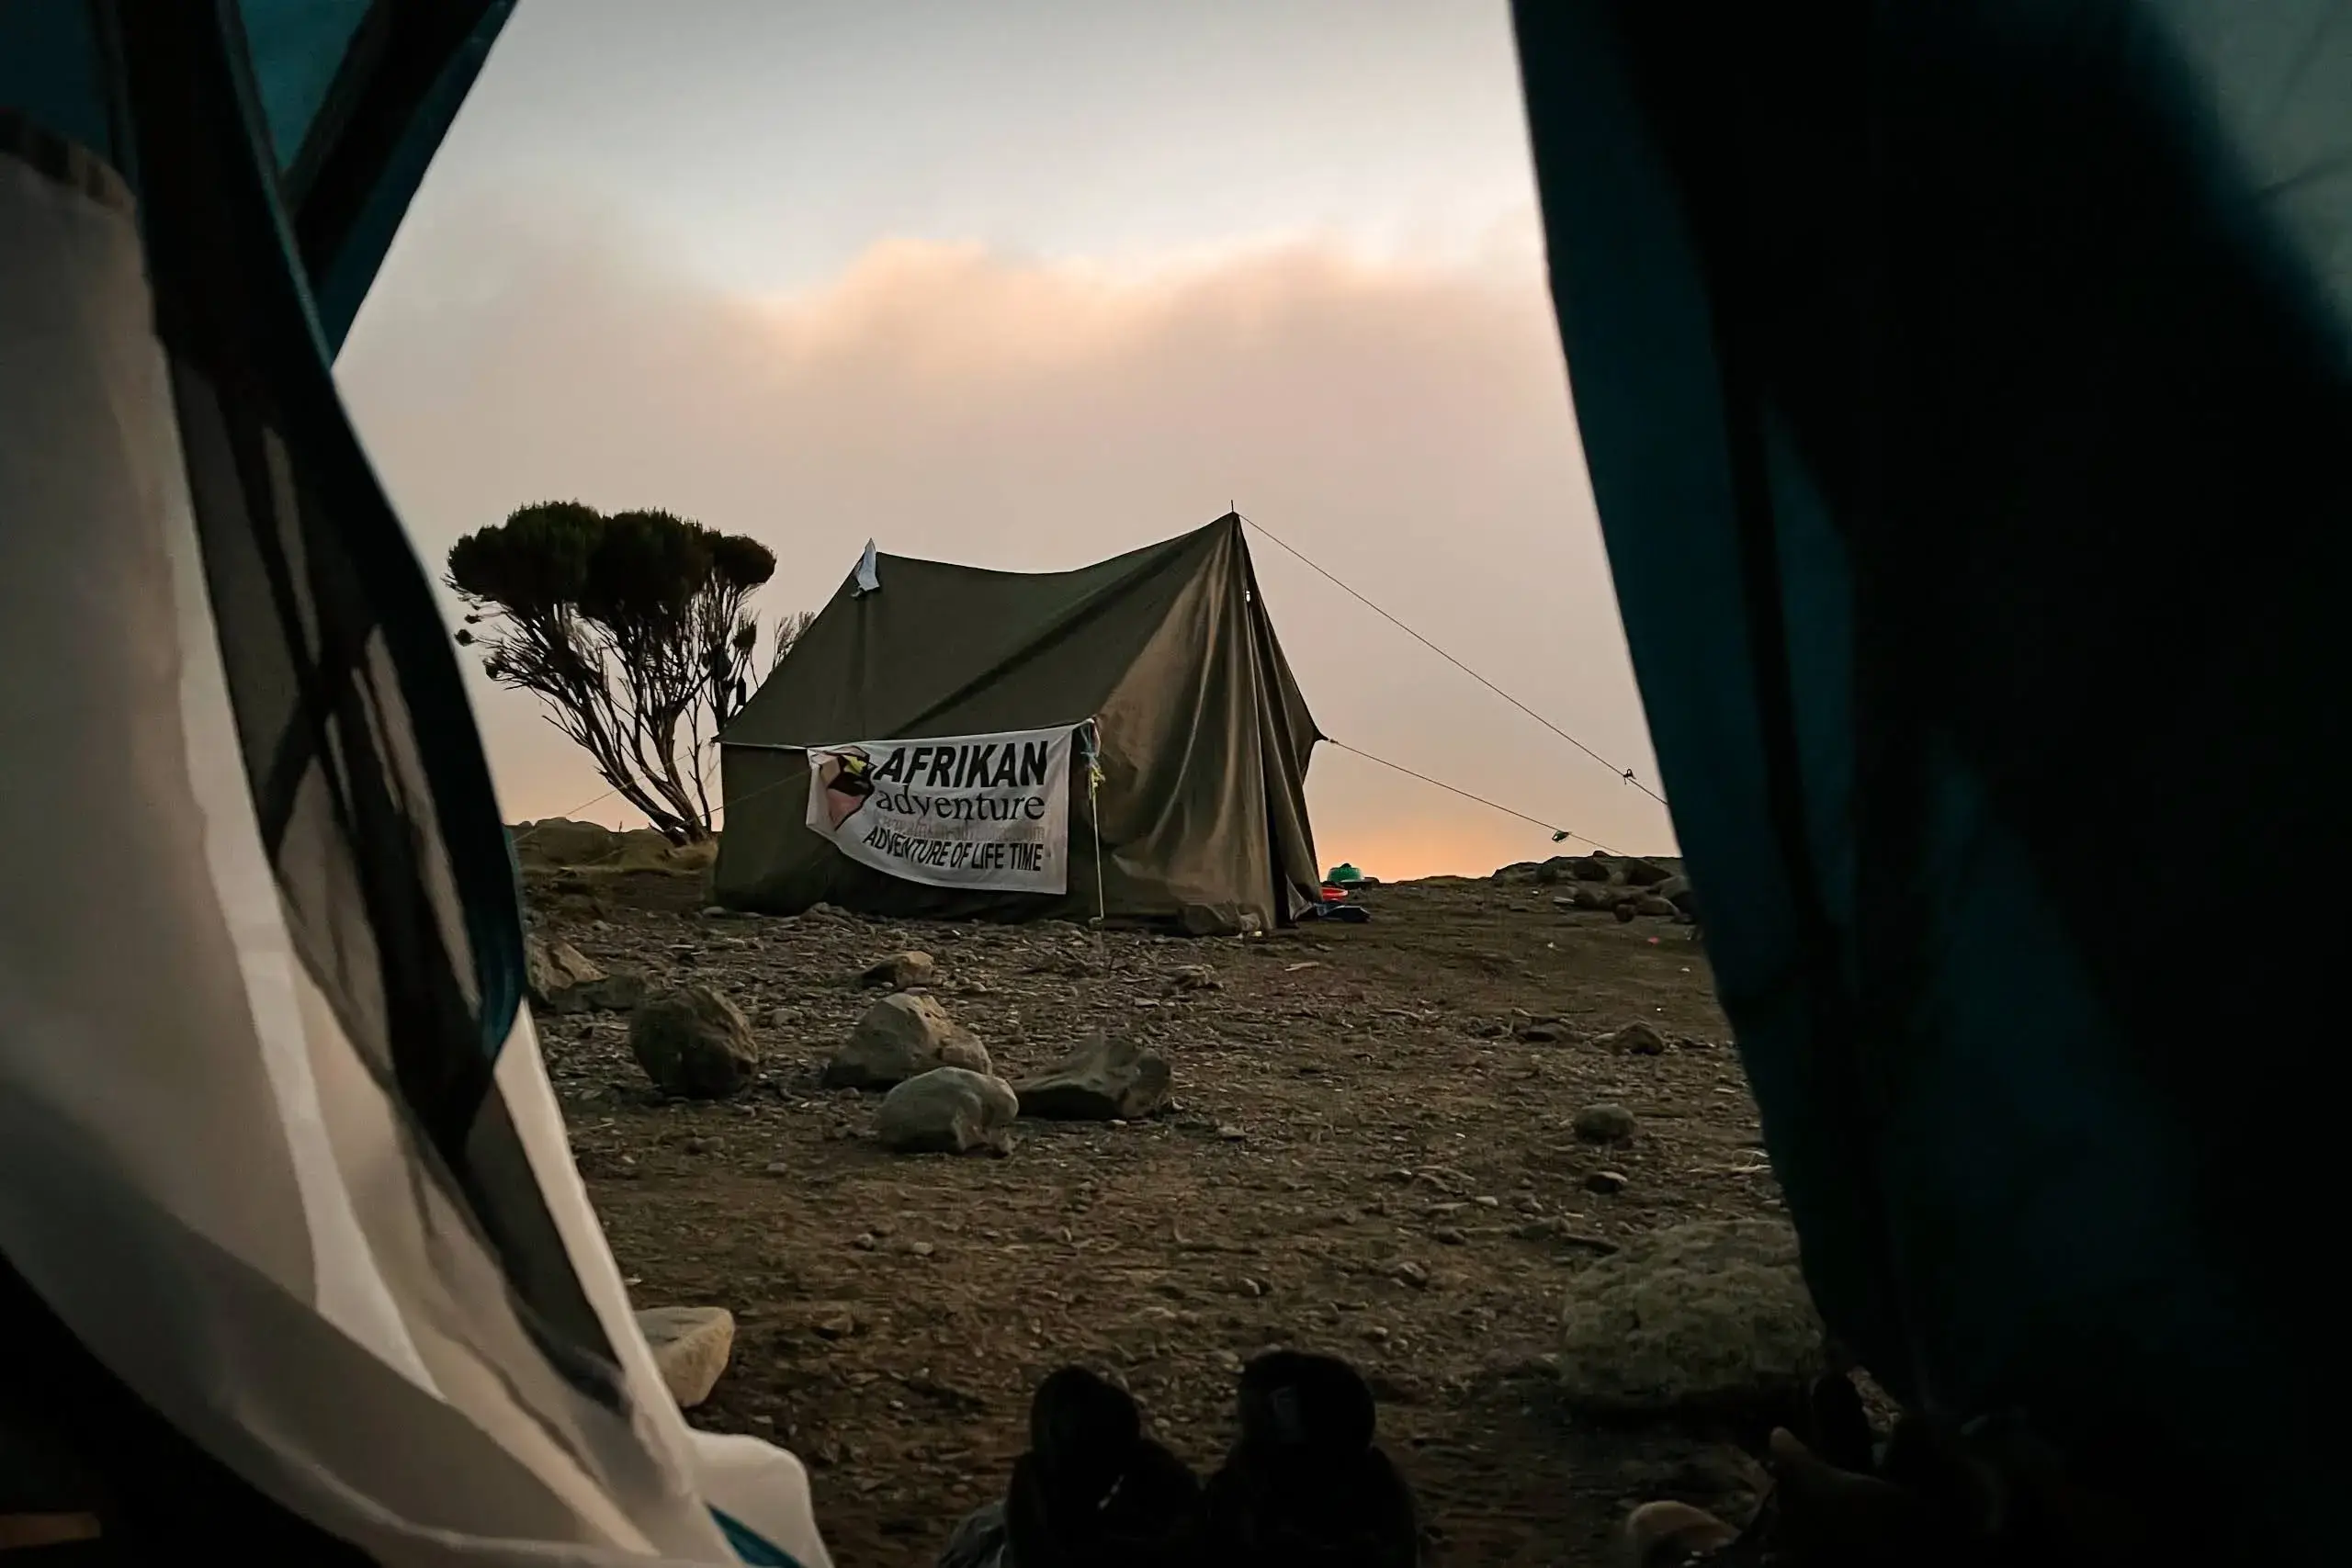 View of Camping tents of afrikan adventures in treks